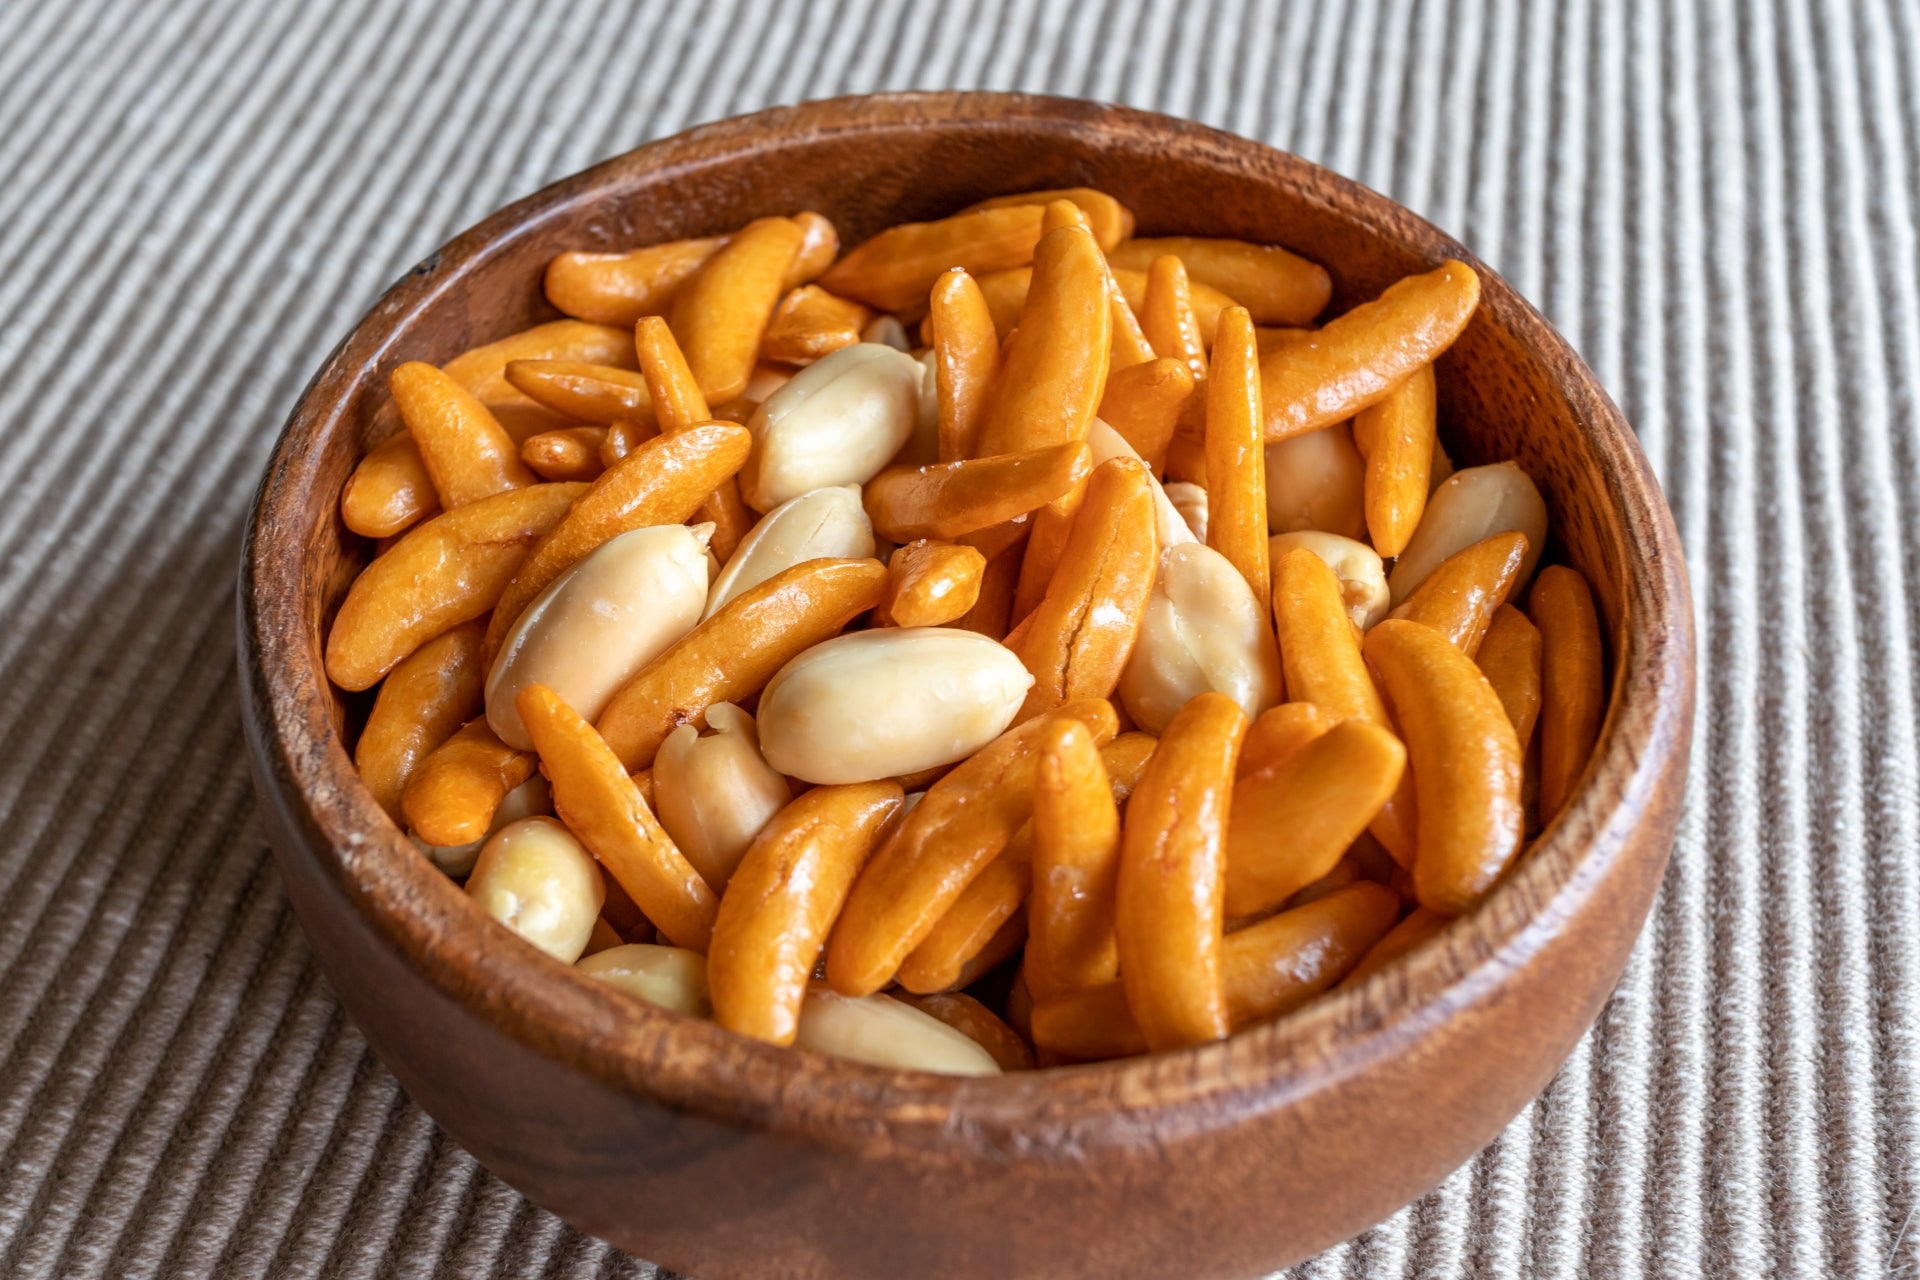 Kameda Kakinotane Snack Rice Crackers with Peanuts 180g – Japanese Taste